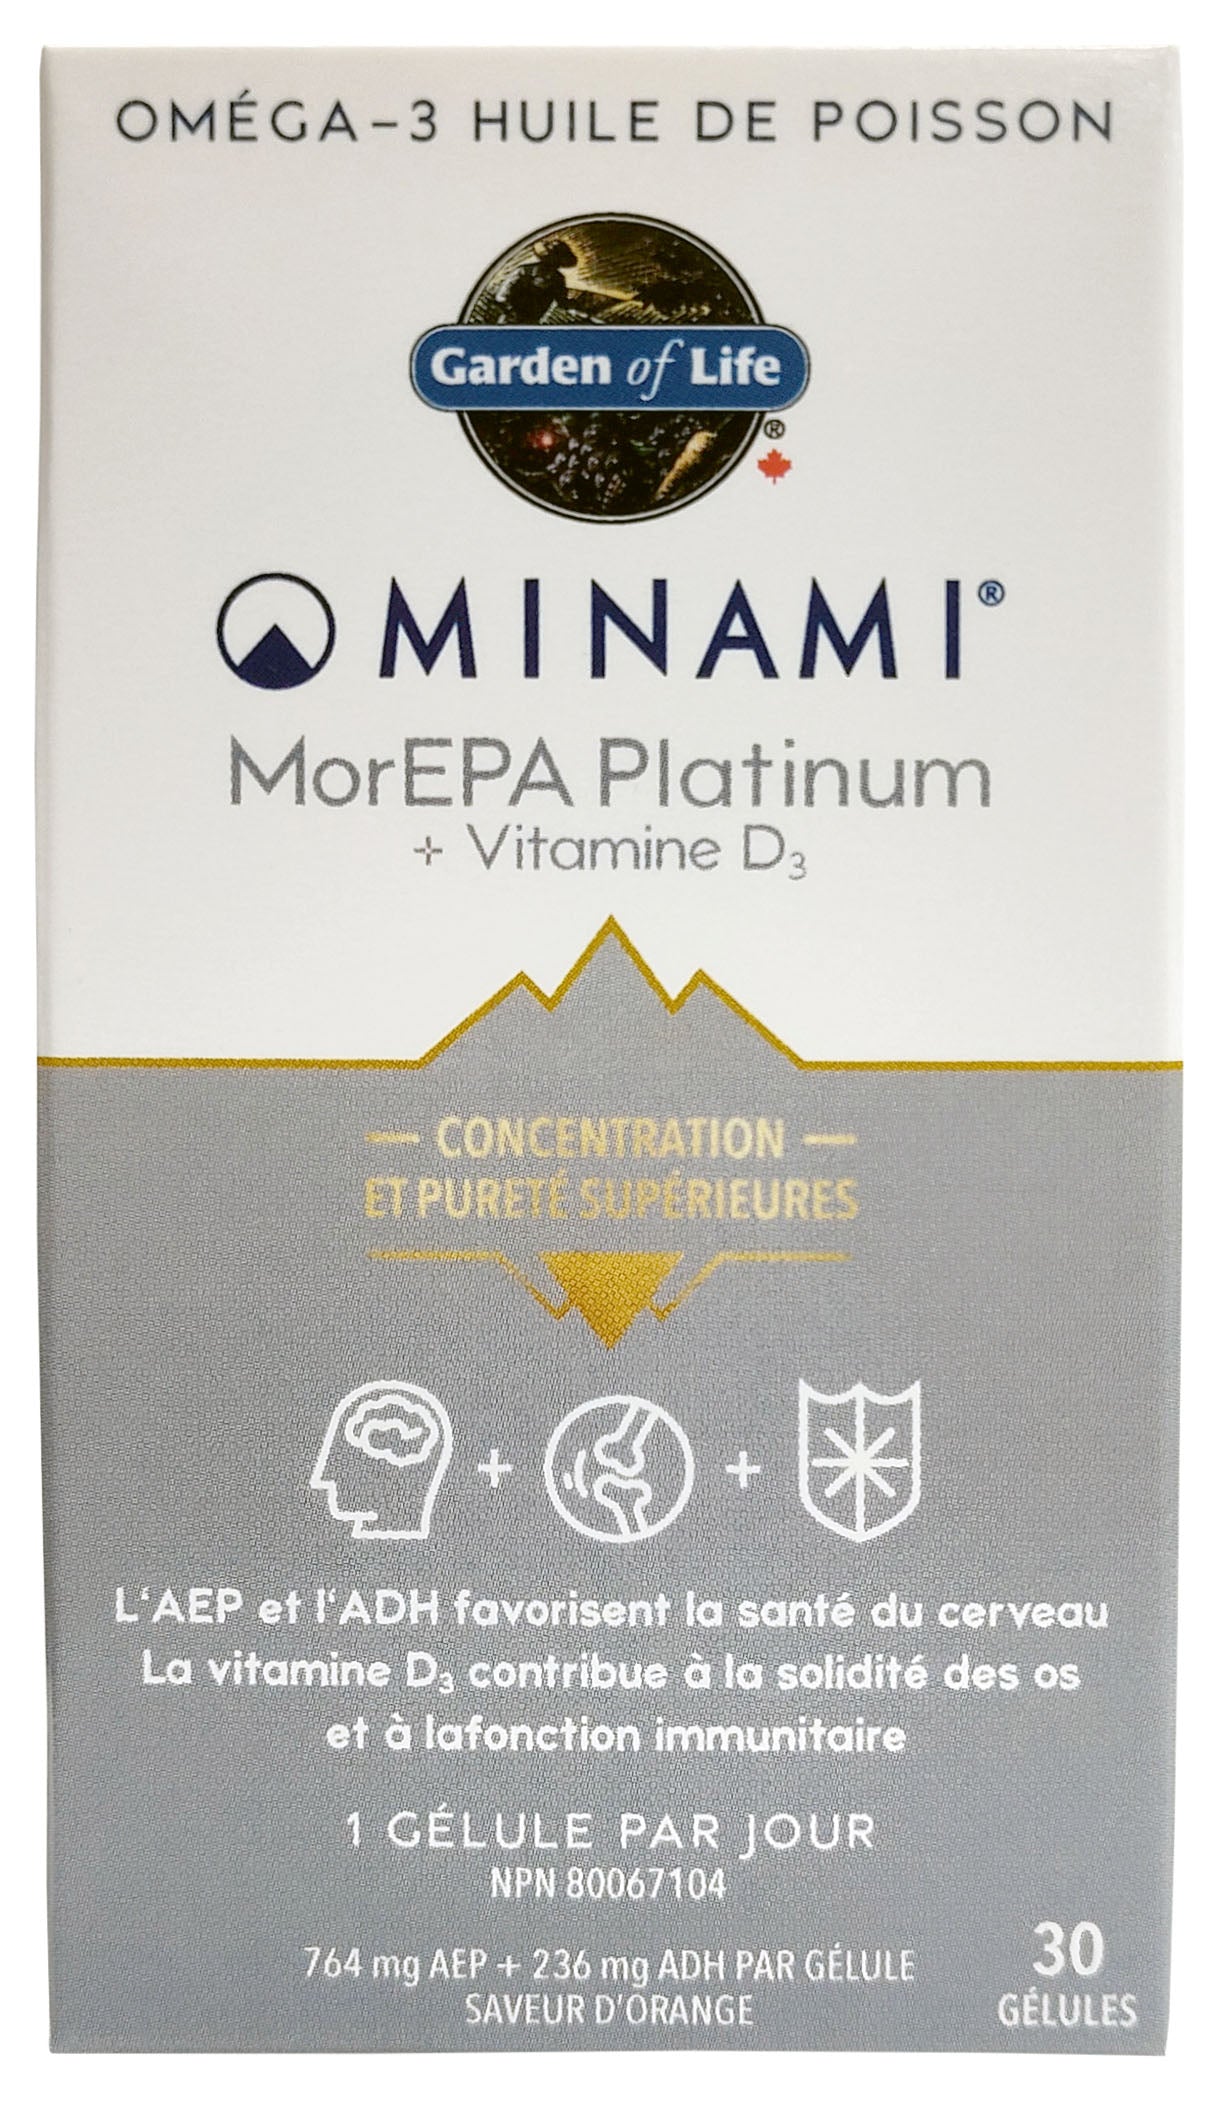 MorEPA platinum (super concentré omega-3 1100mg+vit D sav orange) 30gel